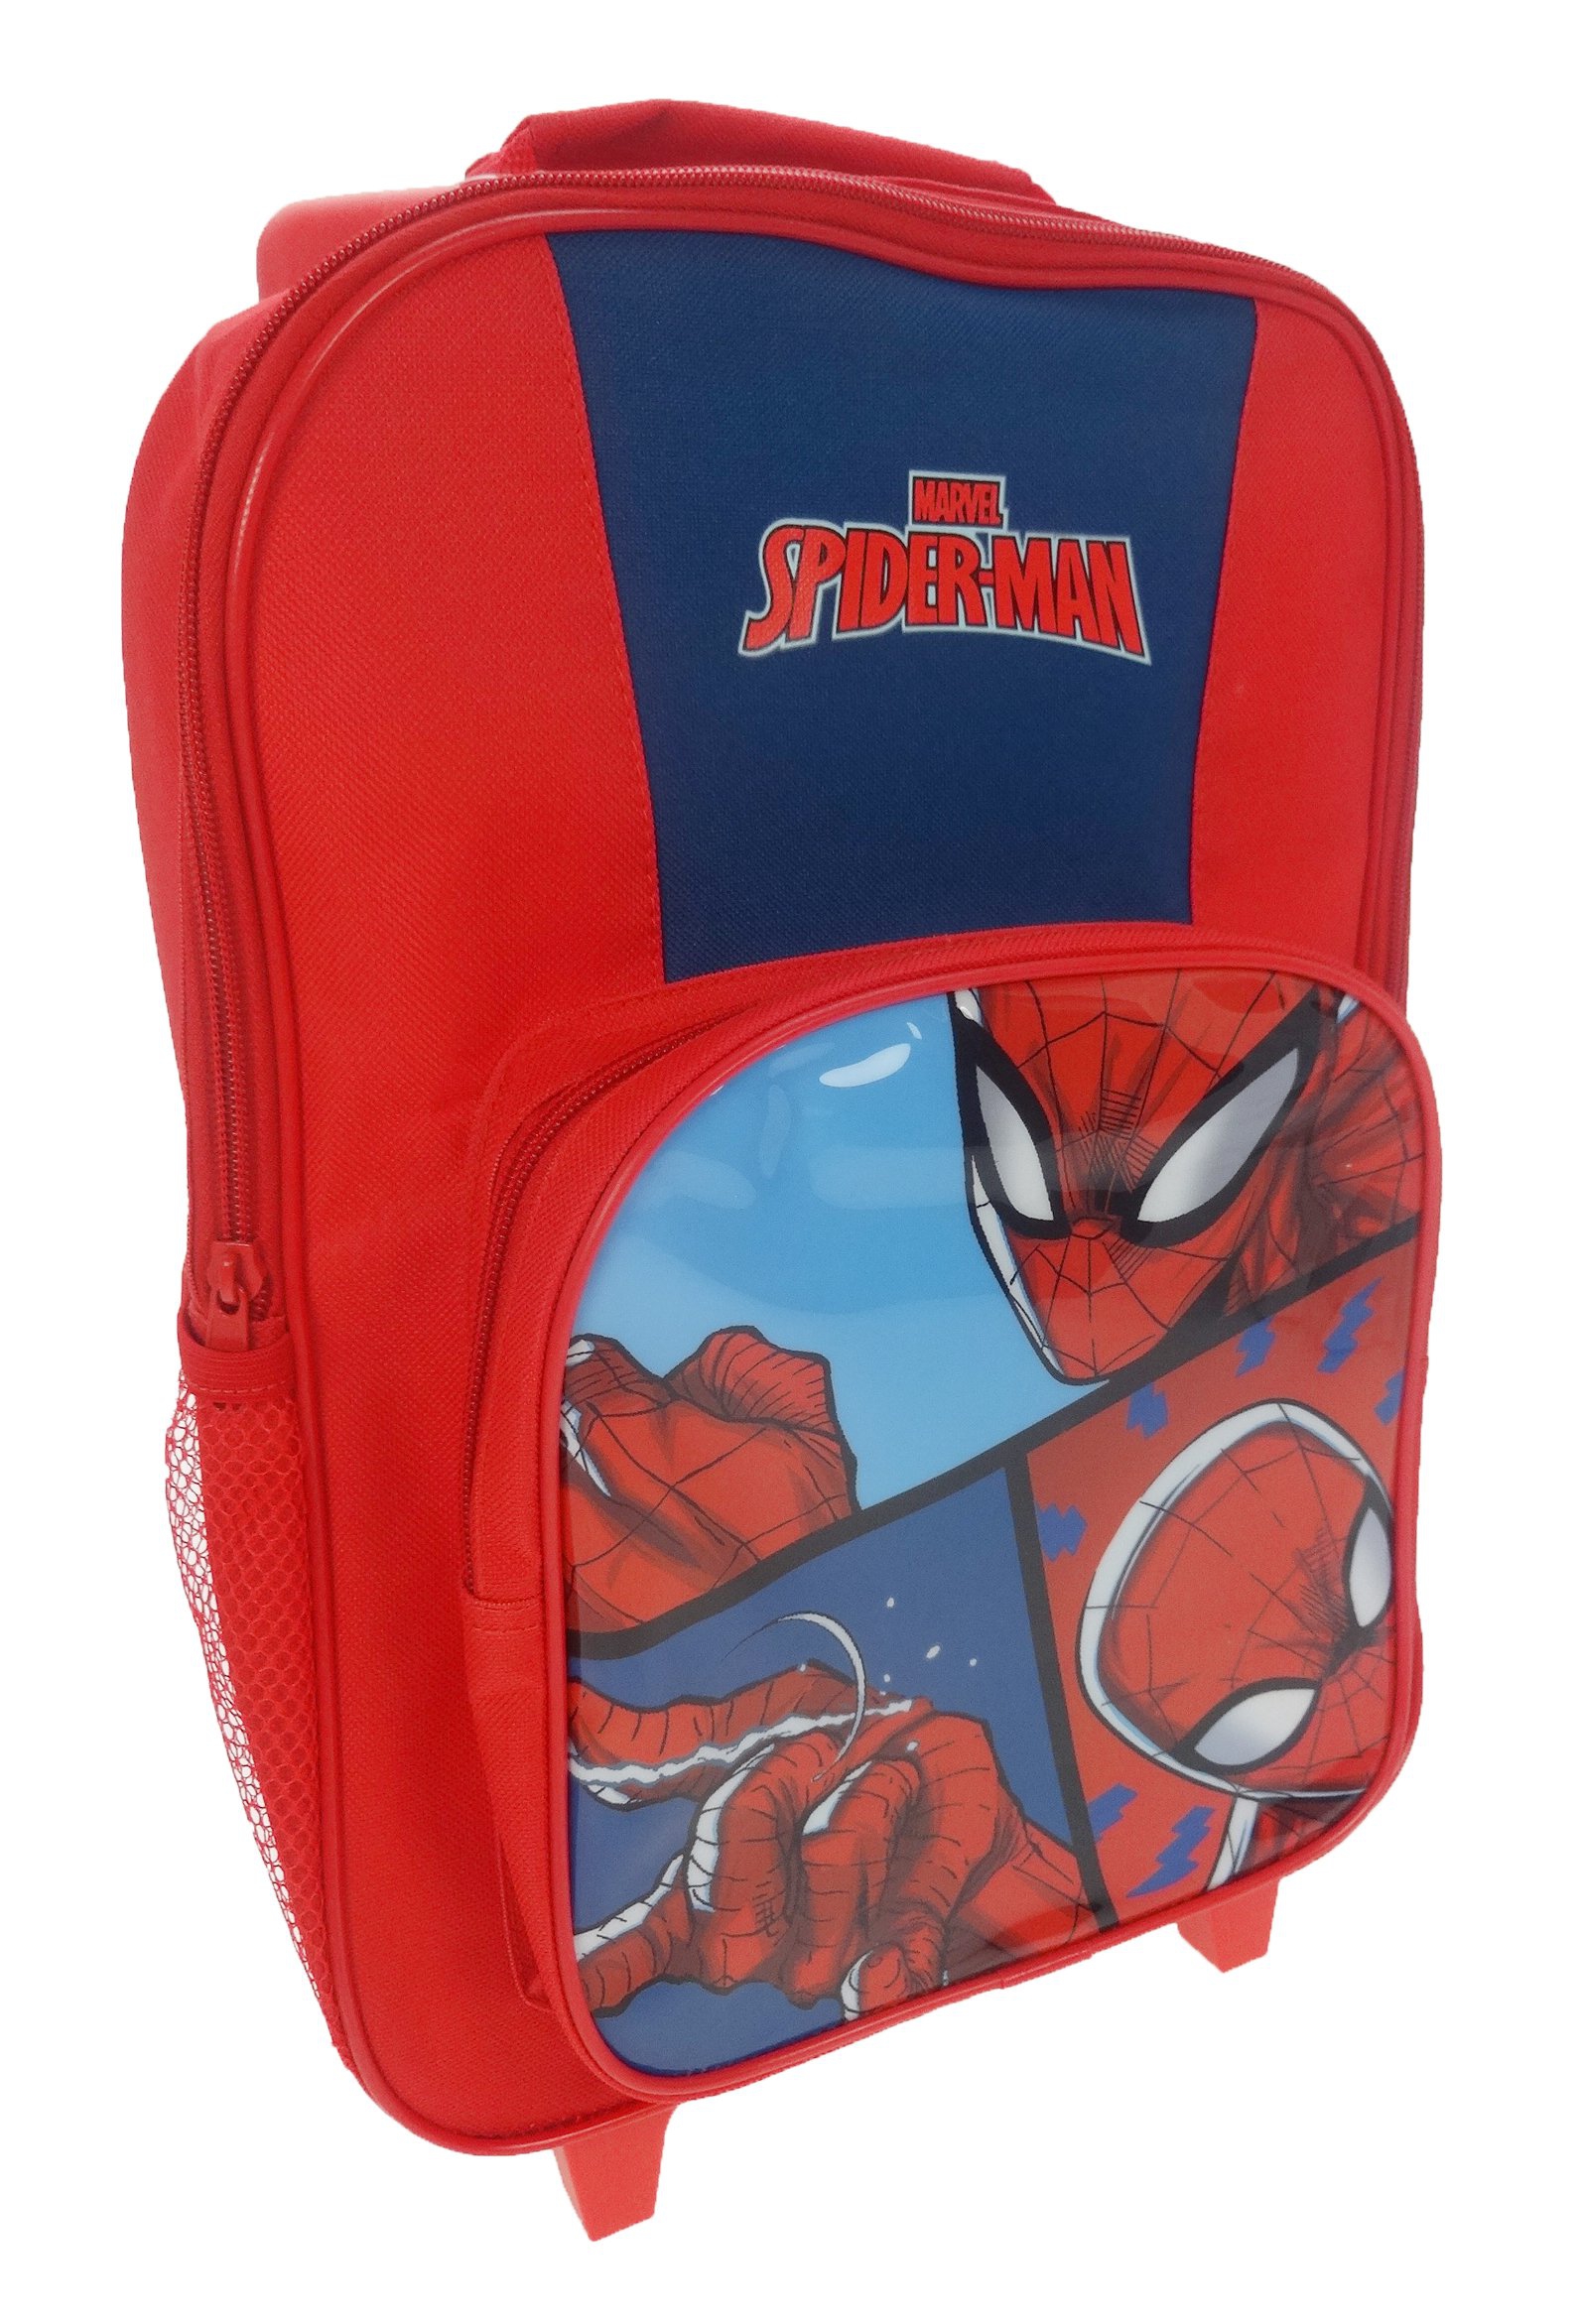 Spiderman 'Abstract' Premium School Travel Trolley Roller Wheeled Bag